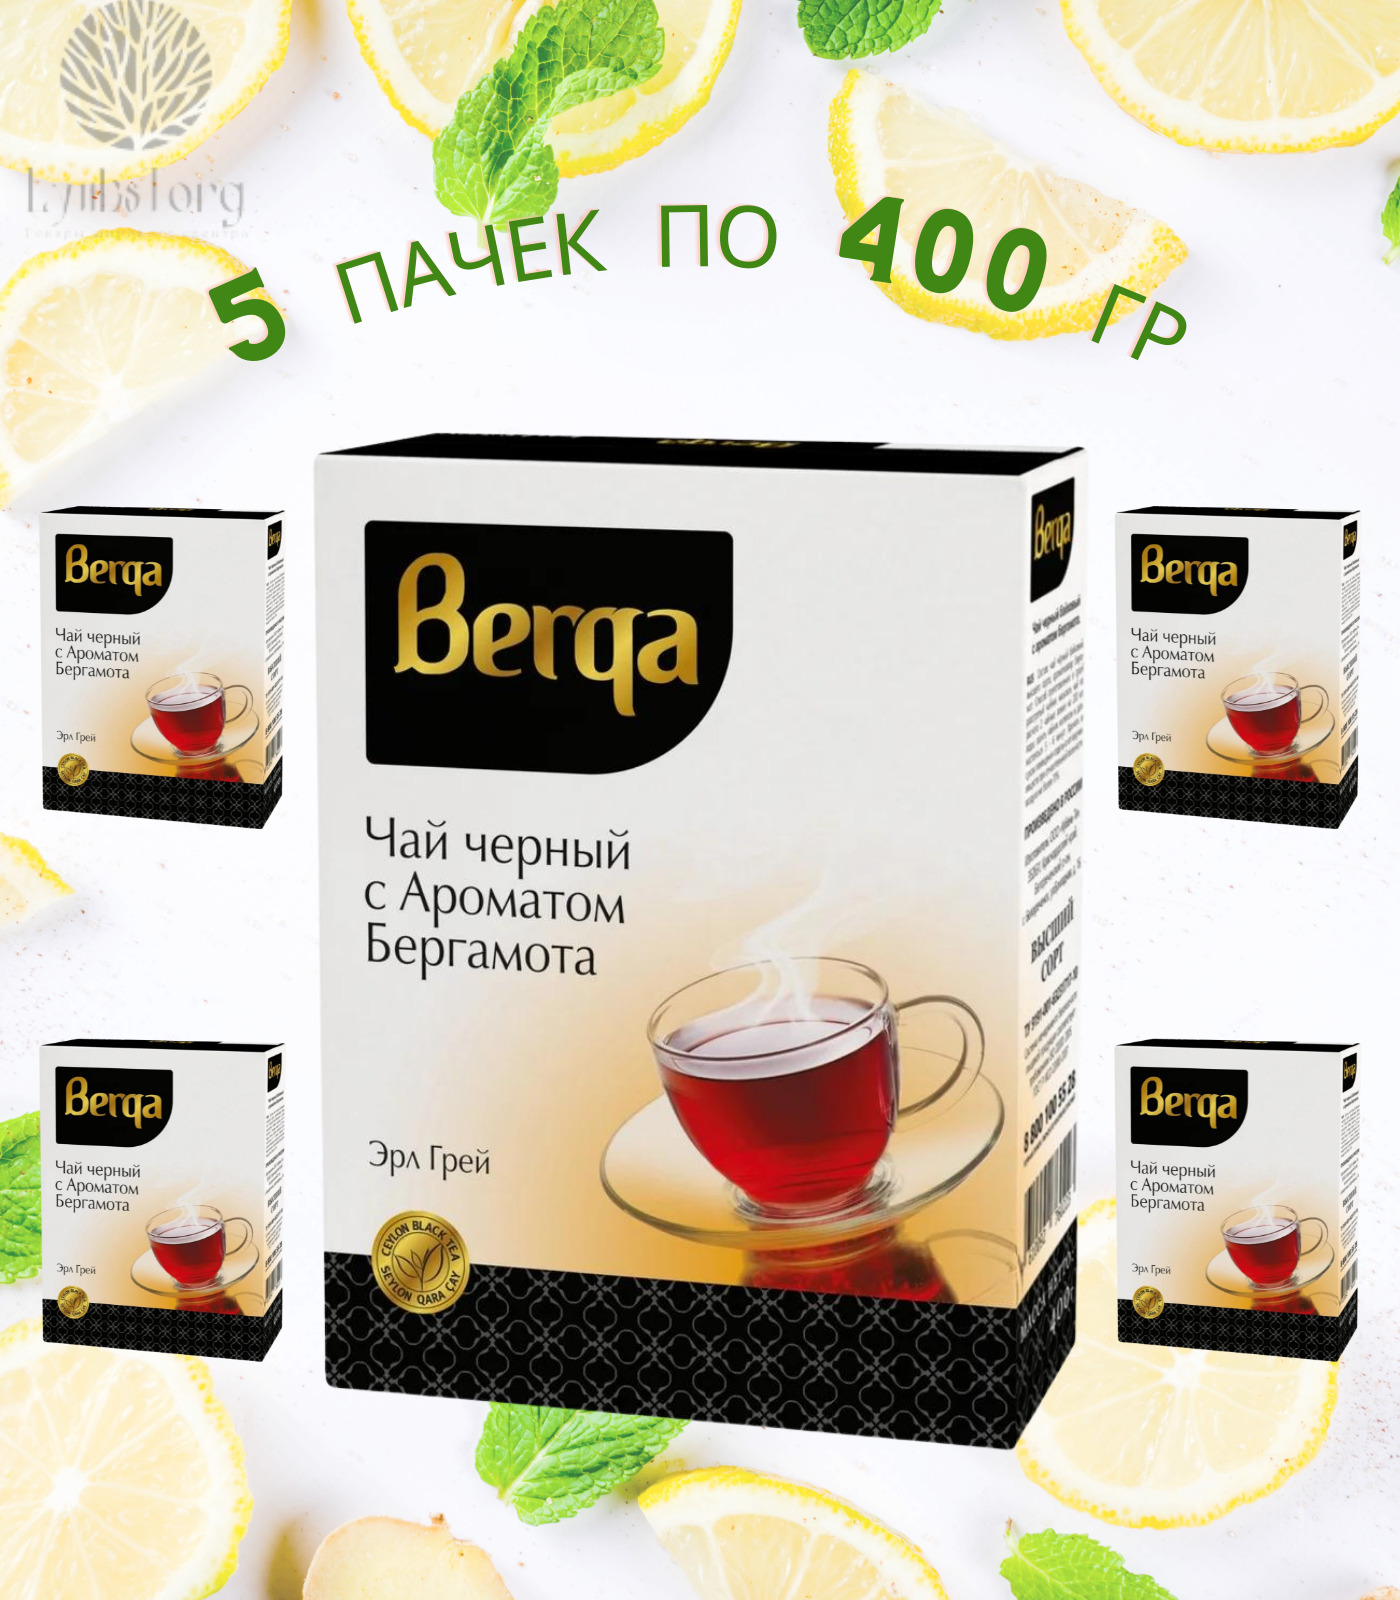 Чай берга. Чай Berga 400. Berga чай Азербайджан. Чай Berga черный. Чай Berga с бергамотом.